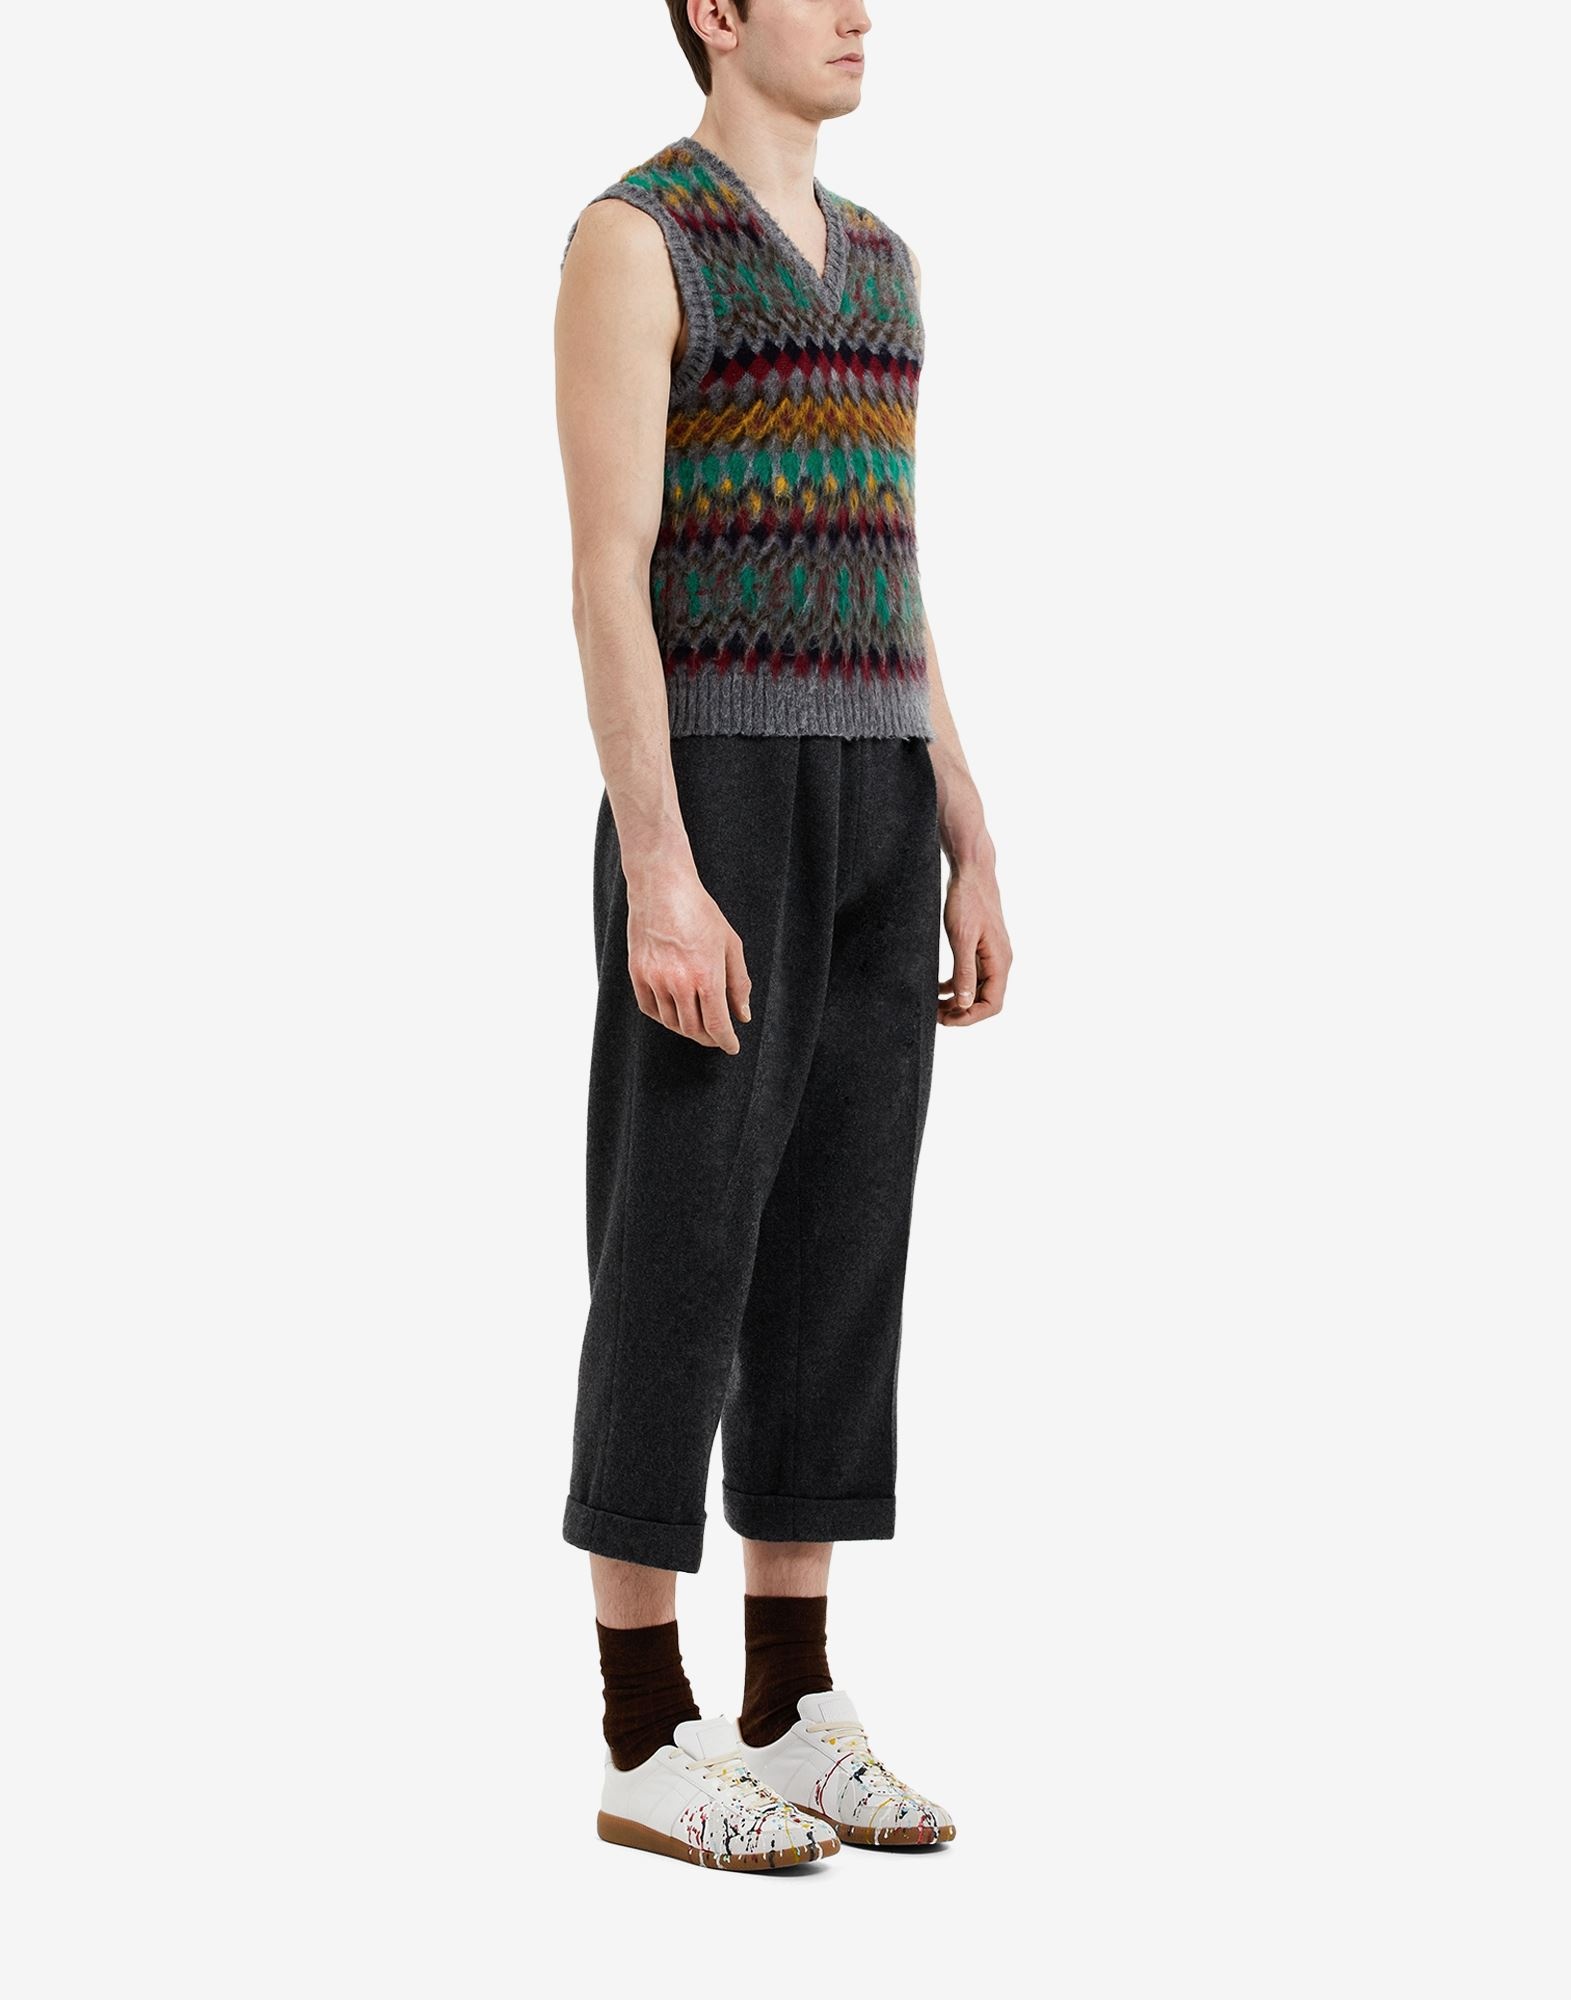 Blurred Fair Isle sleeveless sweater - 3